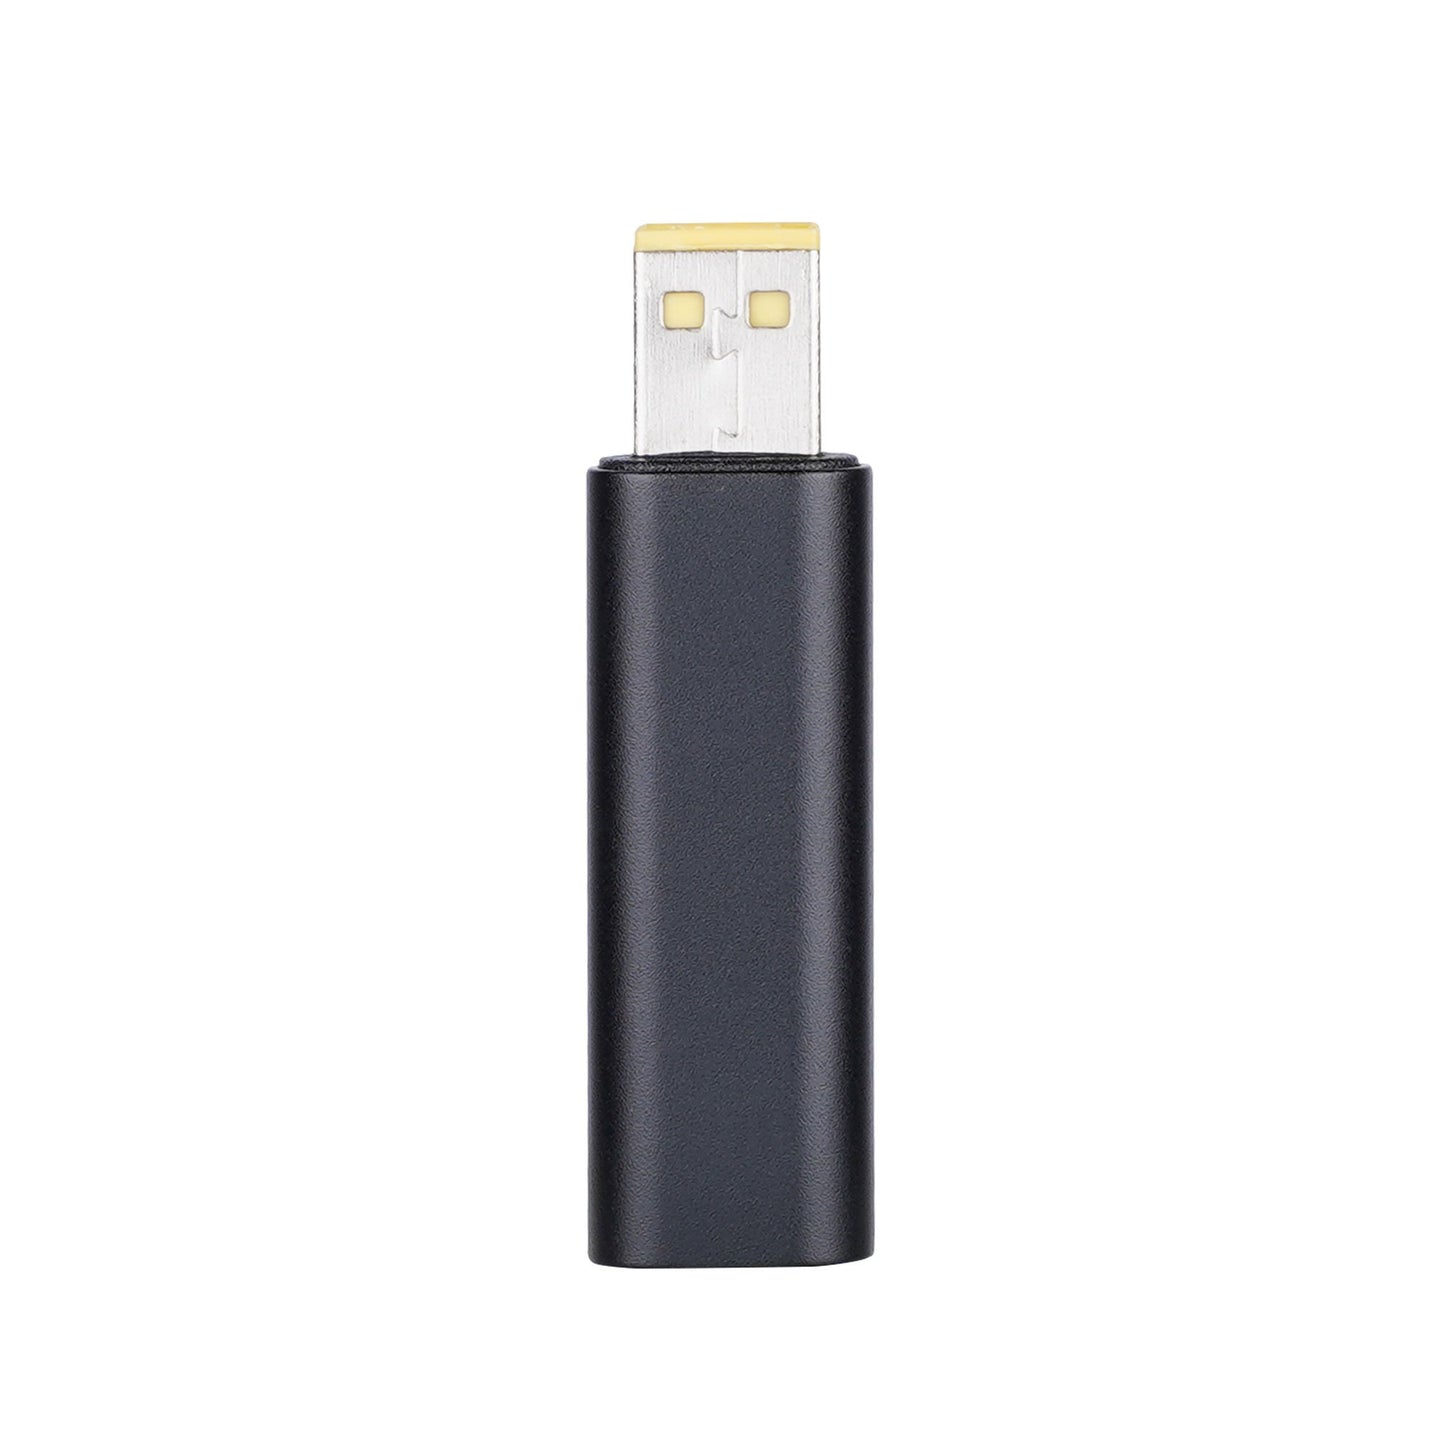 USB-C to DC Adapter Lenovo Ultra Slim 7.55x2.85mm